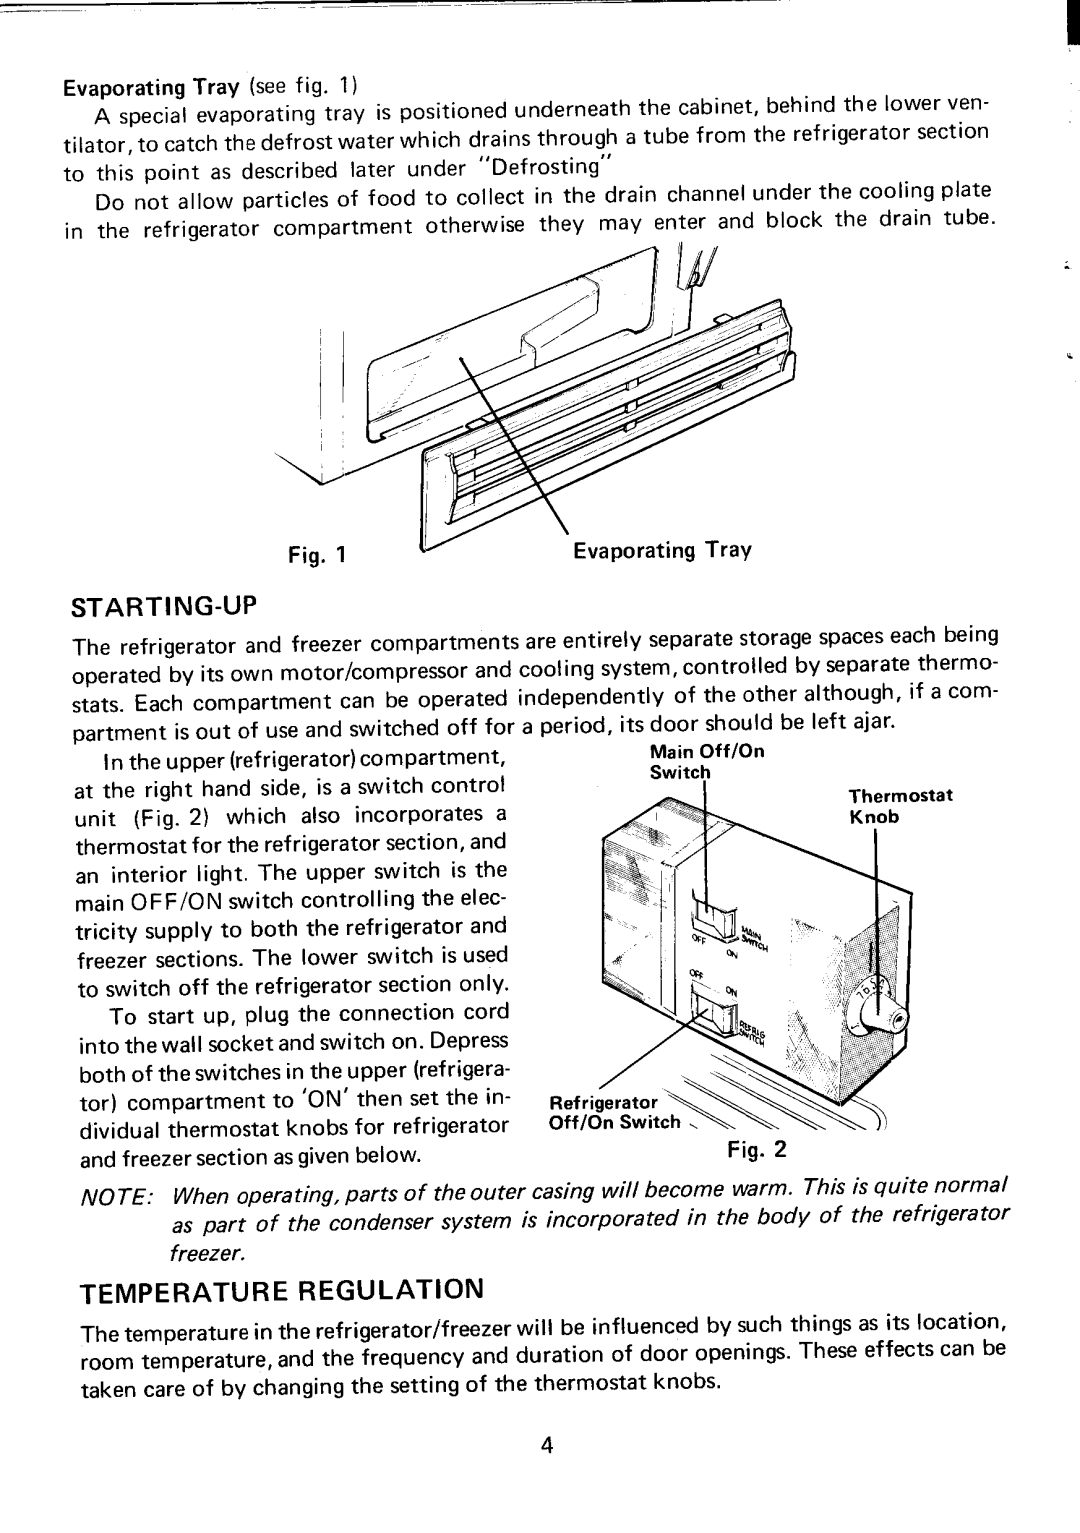 Electrolux TR71/55, TR70/55 manual 